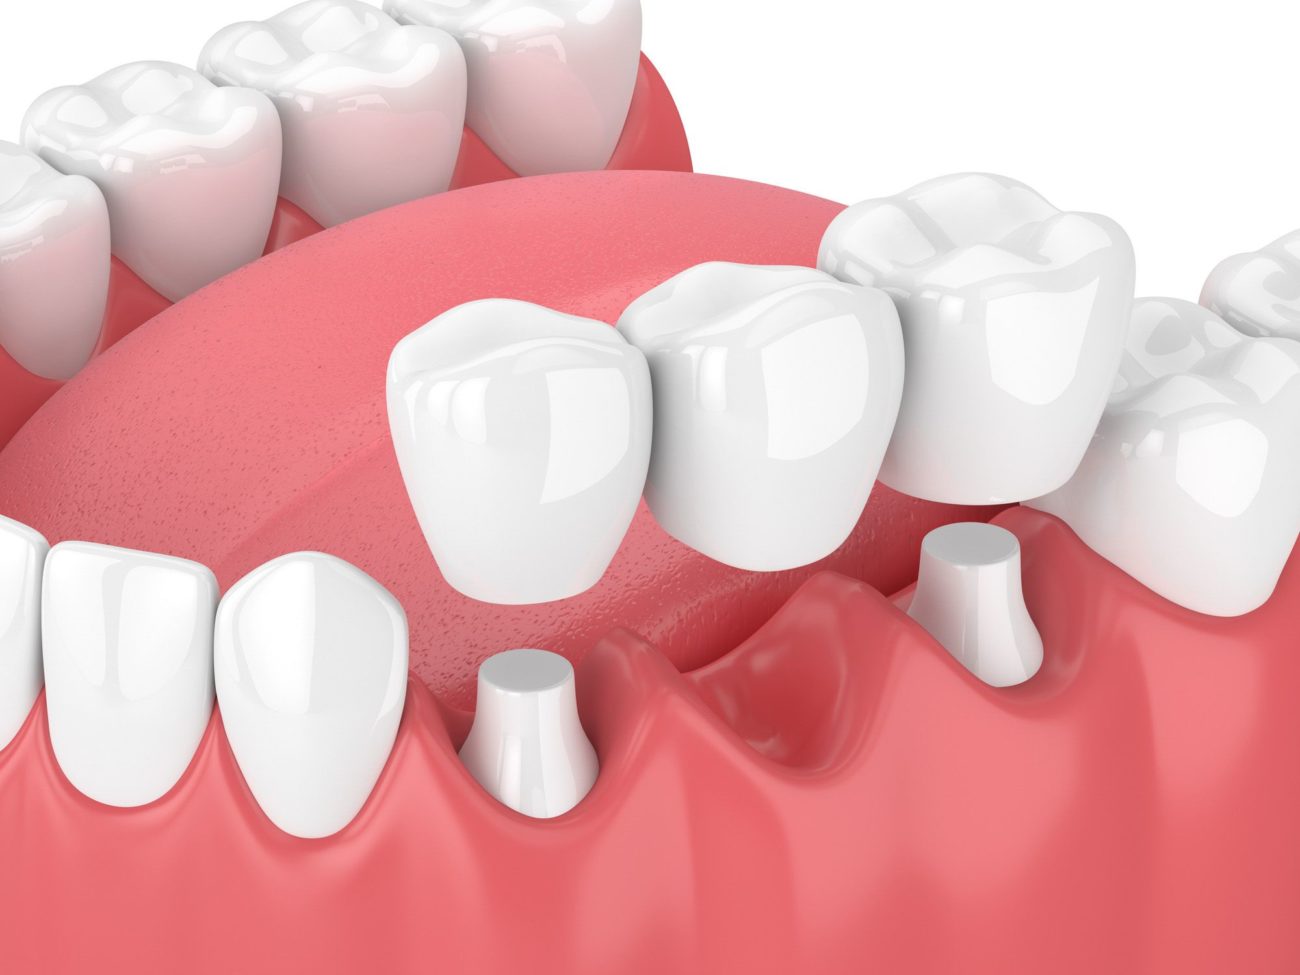 3d image of jaw with dental bridge benefits of dental bridges restorative dentistry dentist in Allentown Pennsylvania